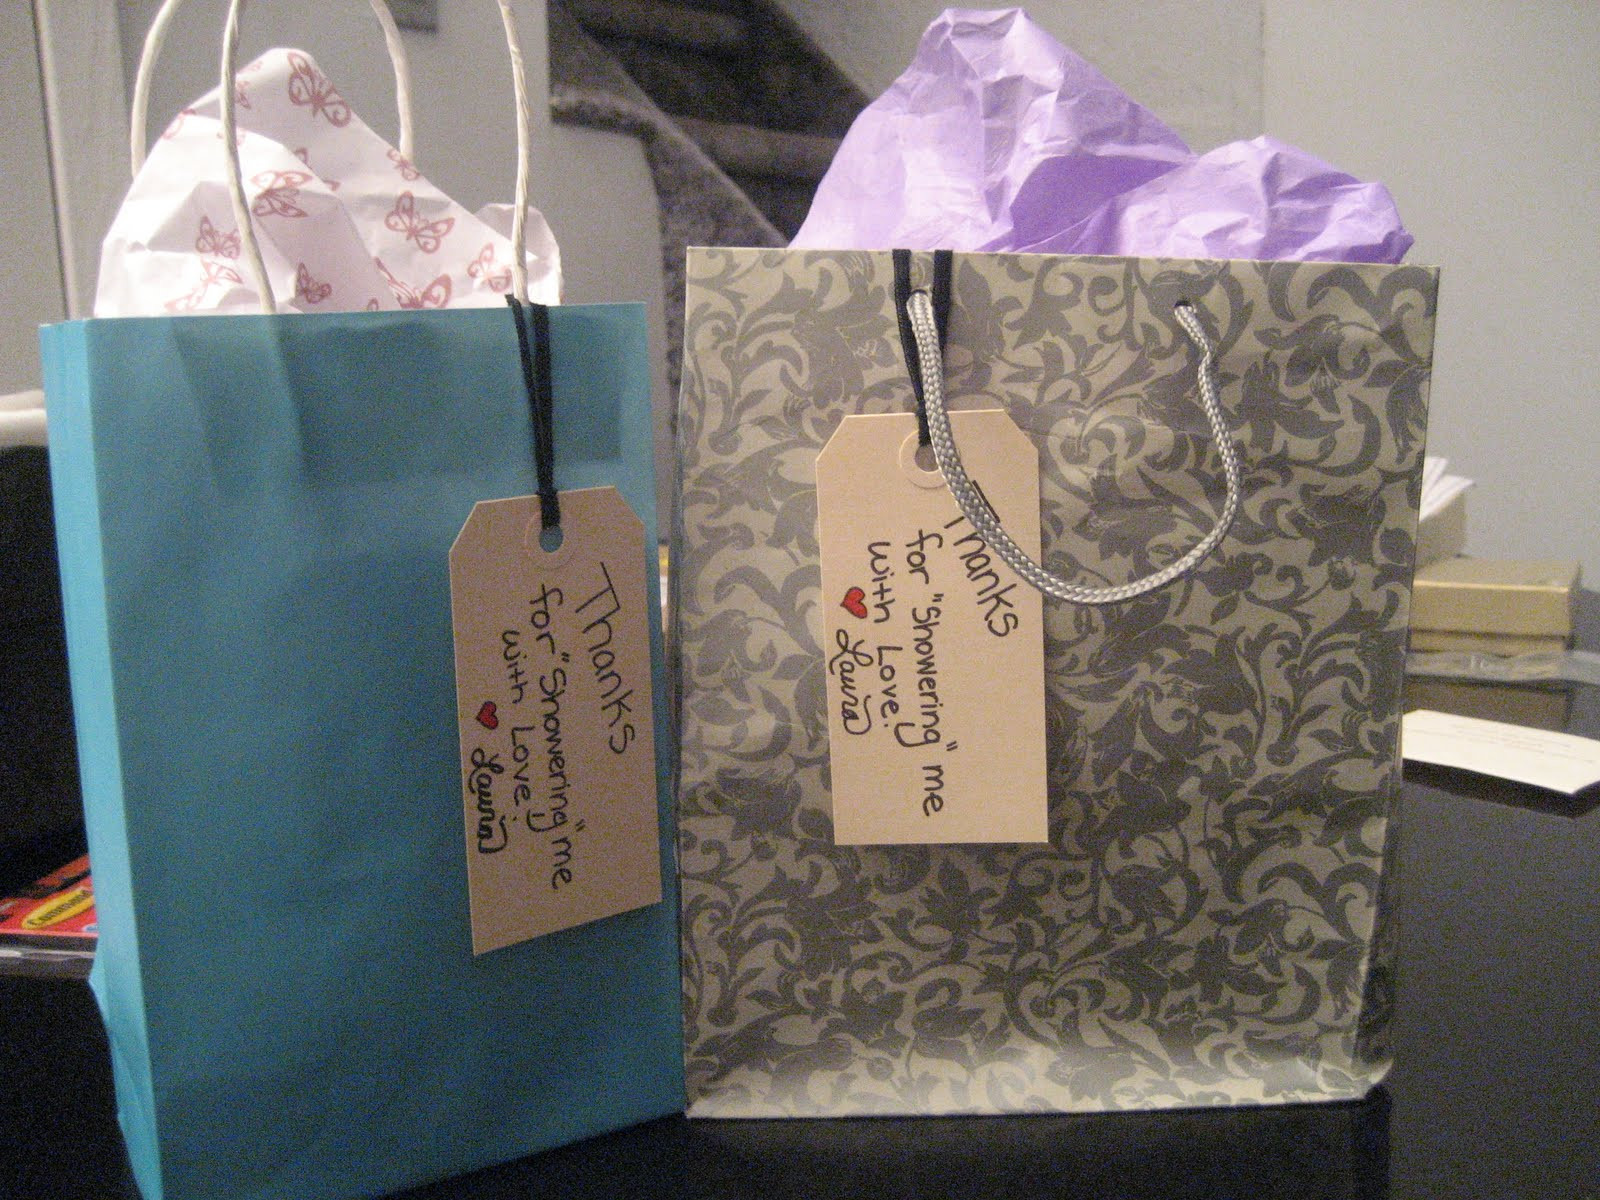 Wedding Shower Host Gift Ideas
 Saying "I Do" Bridal Shower Hostess Gifts